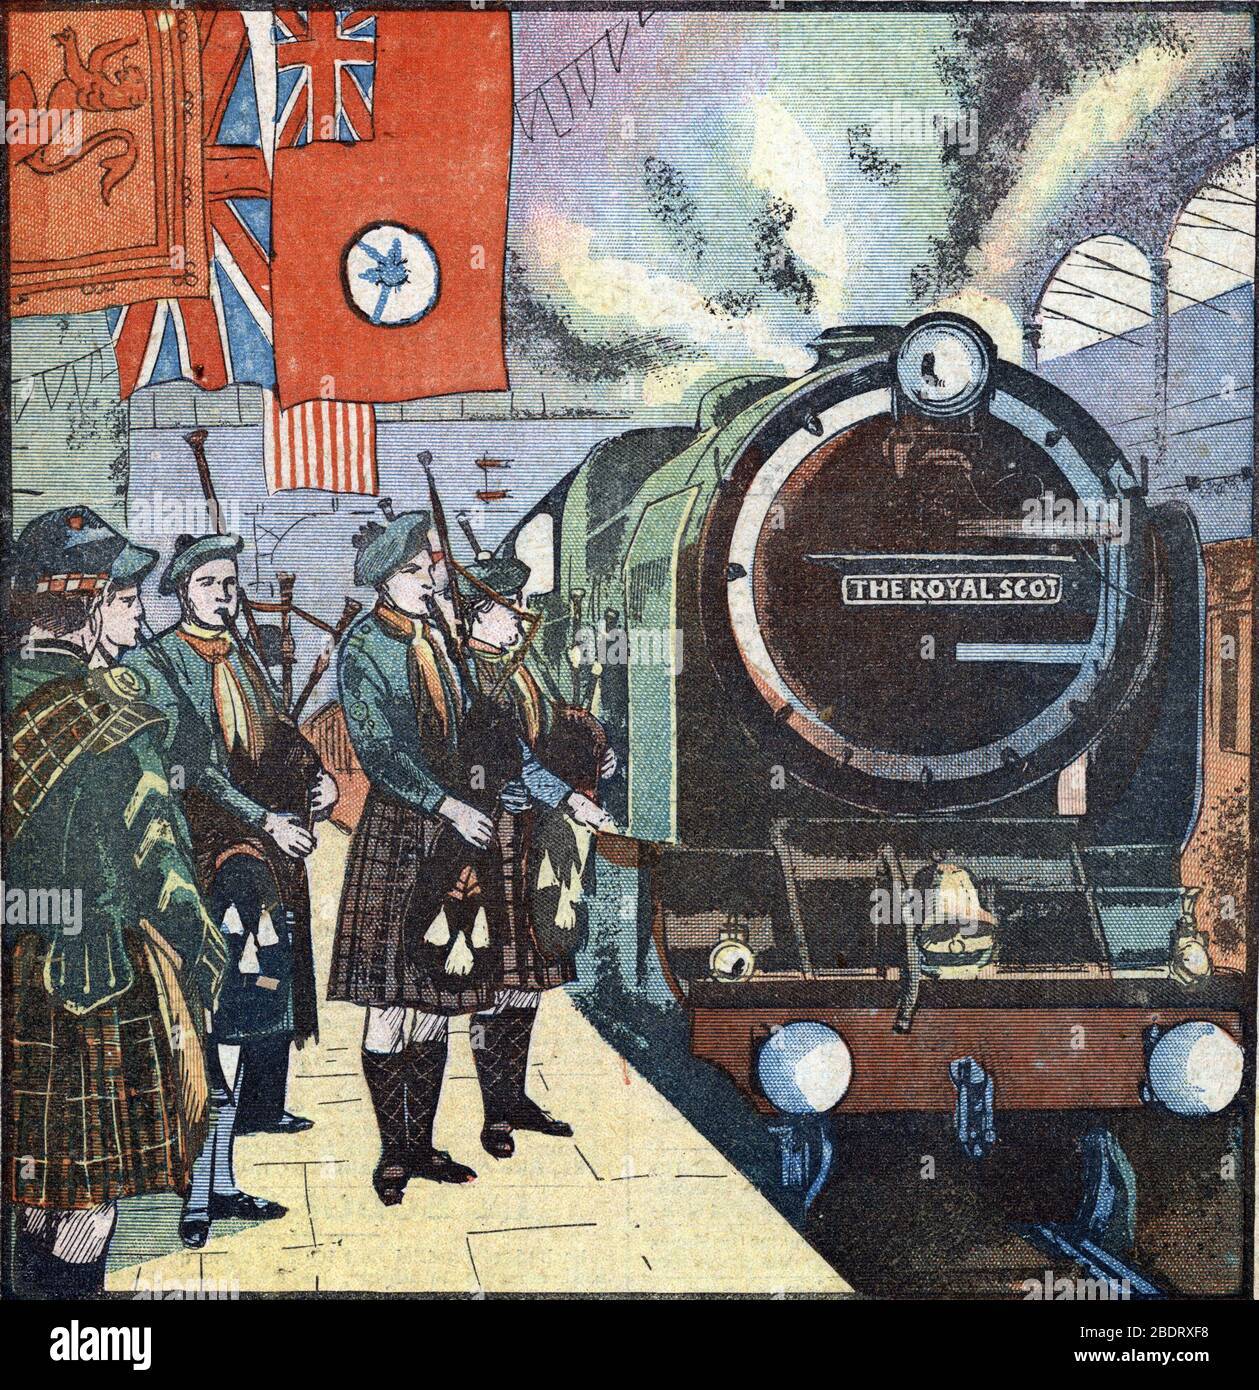 'L'arrivee du train 'Royal scot' a la gare d'Euston accueilli en musique par les boy scouts (boy-scouts) ecosais' (el tren real scot en el Euston Foto de stock